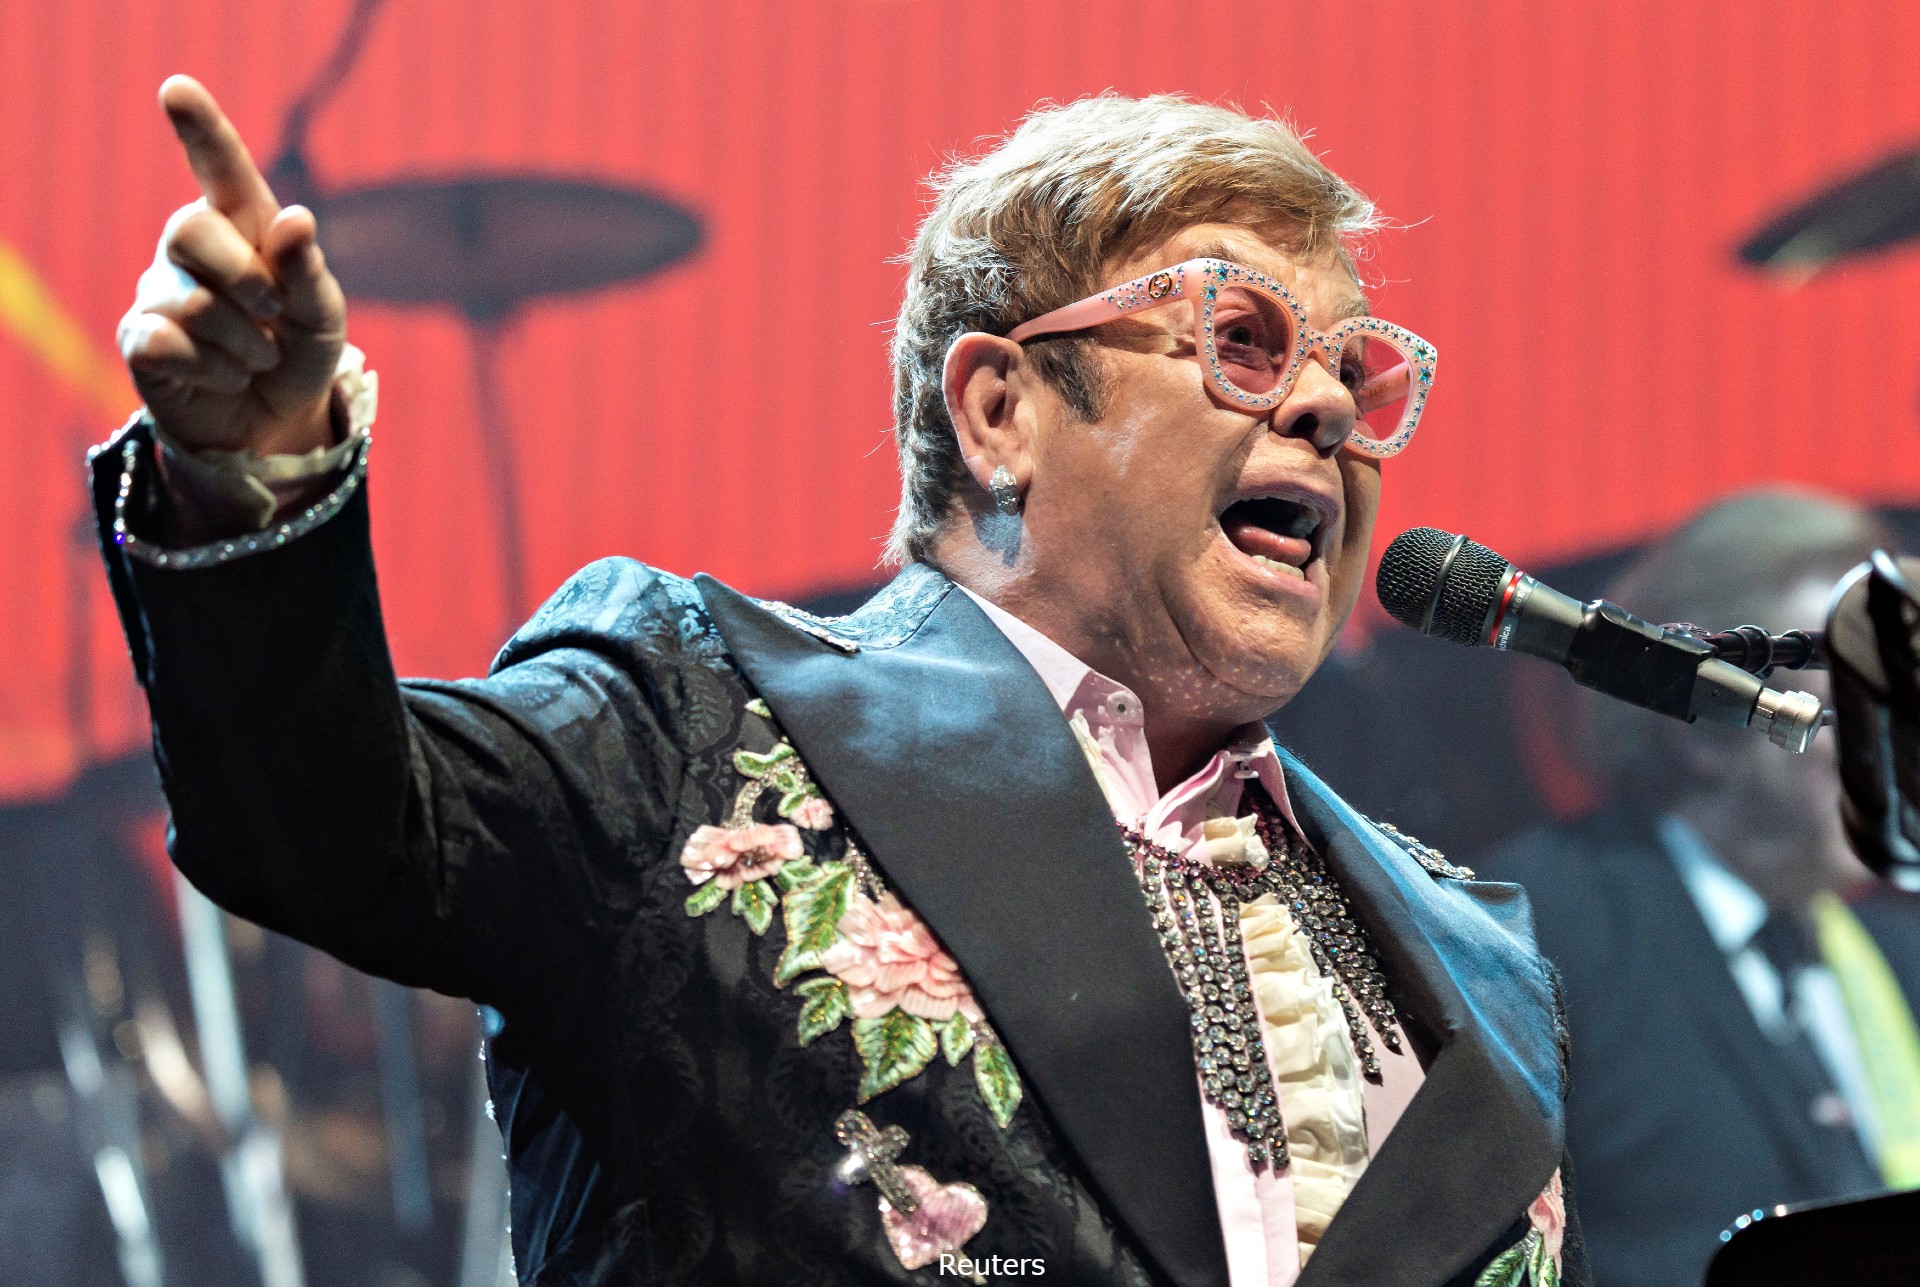 Elton John had his first #1